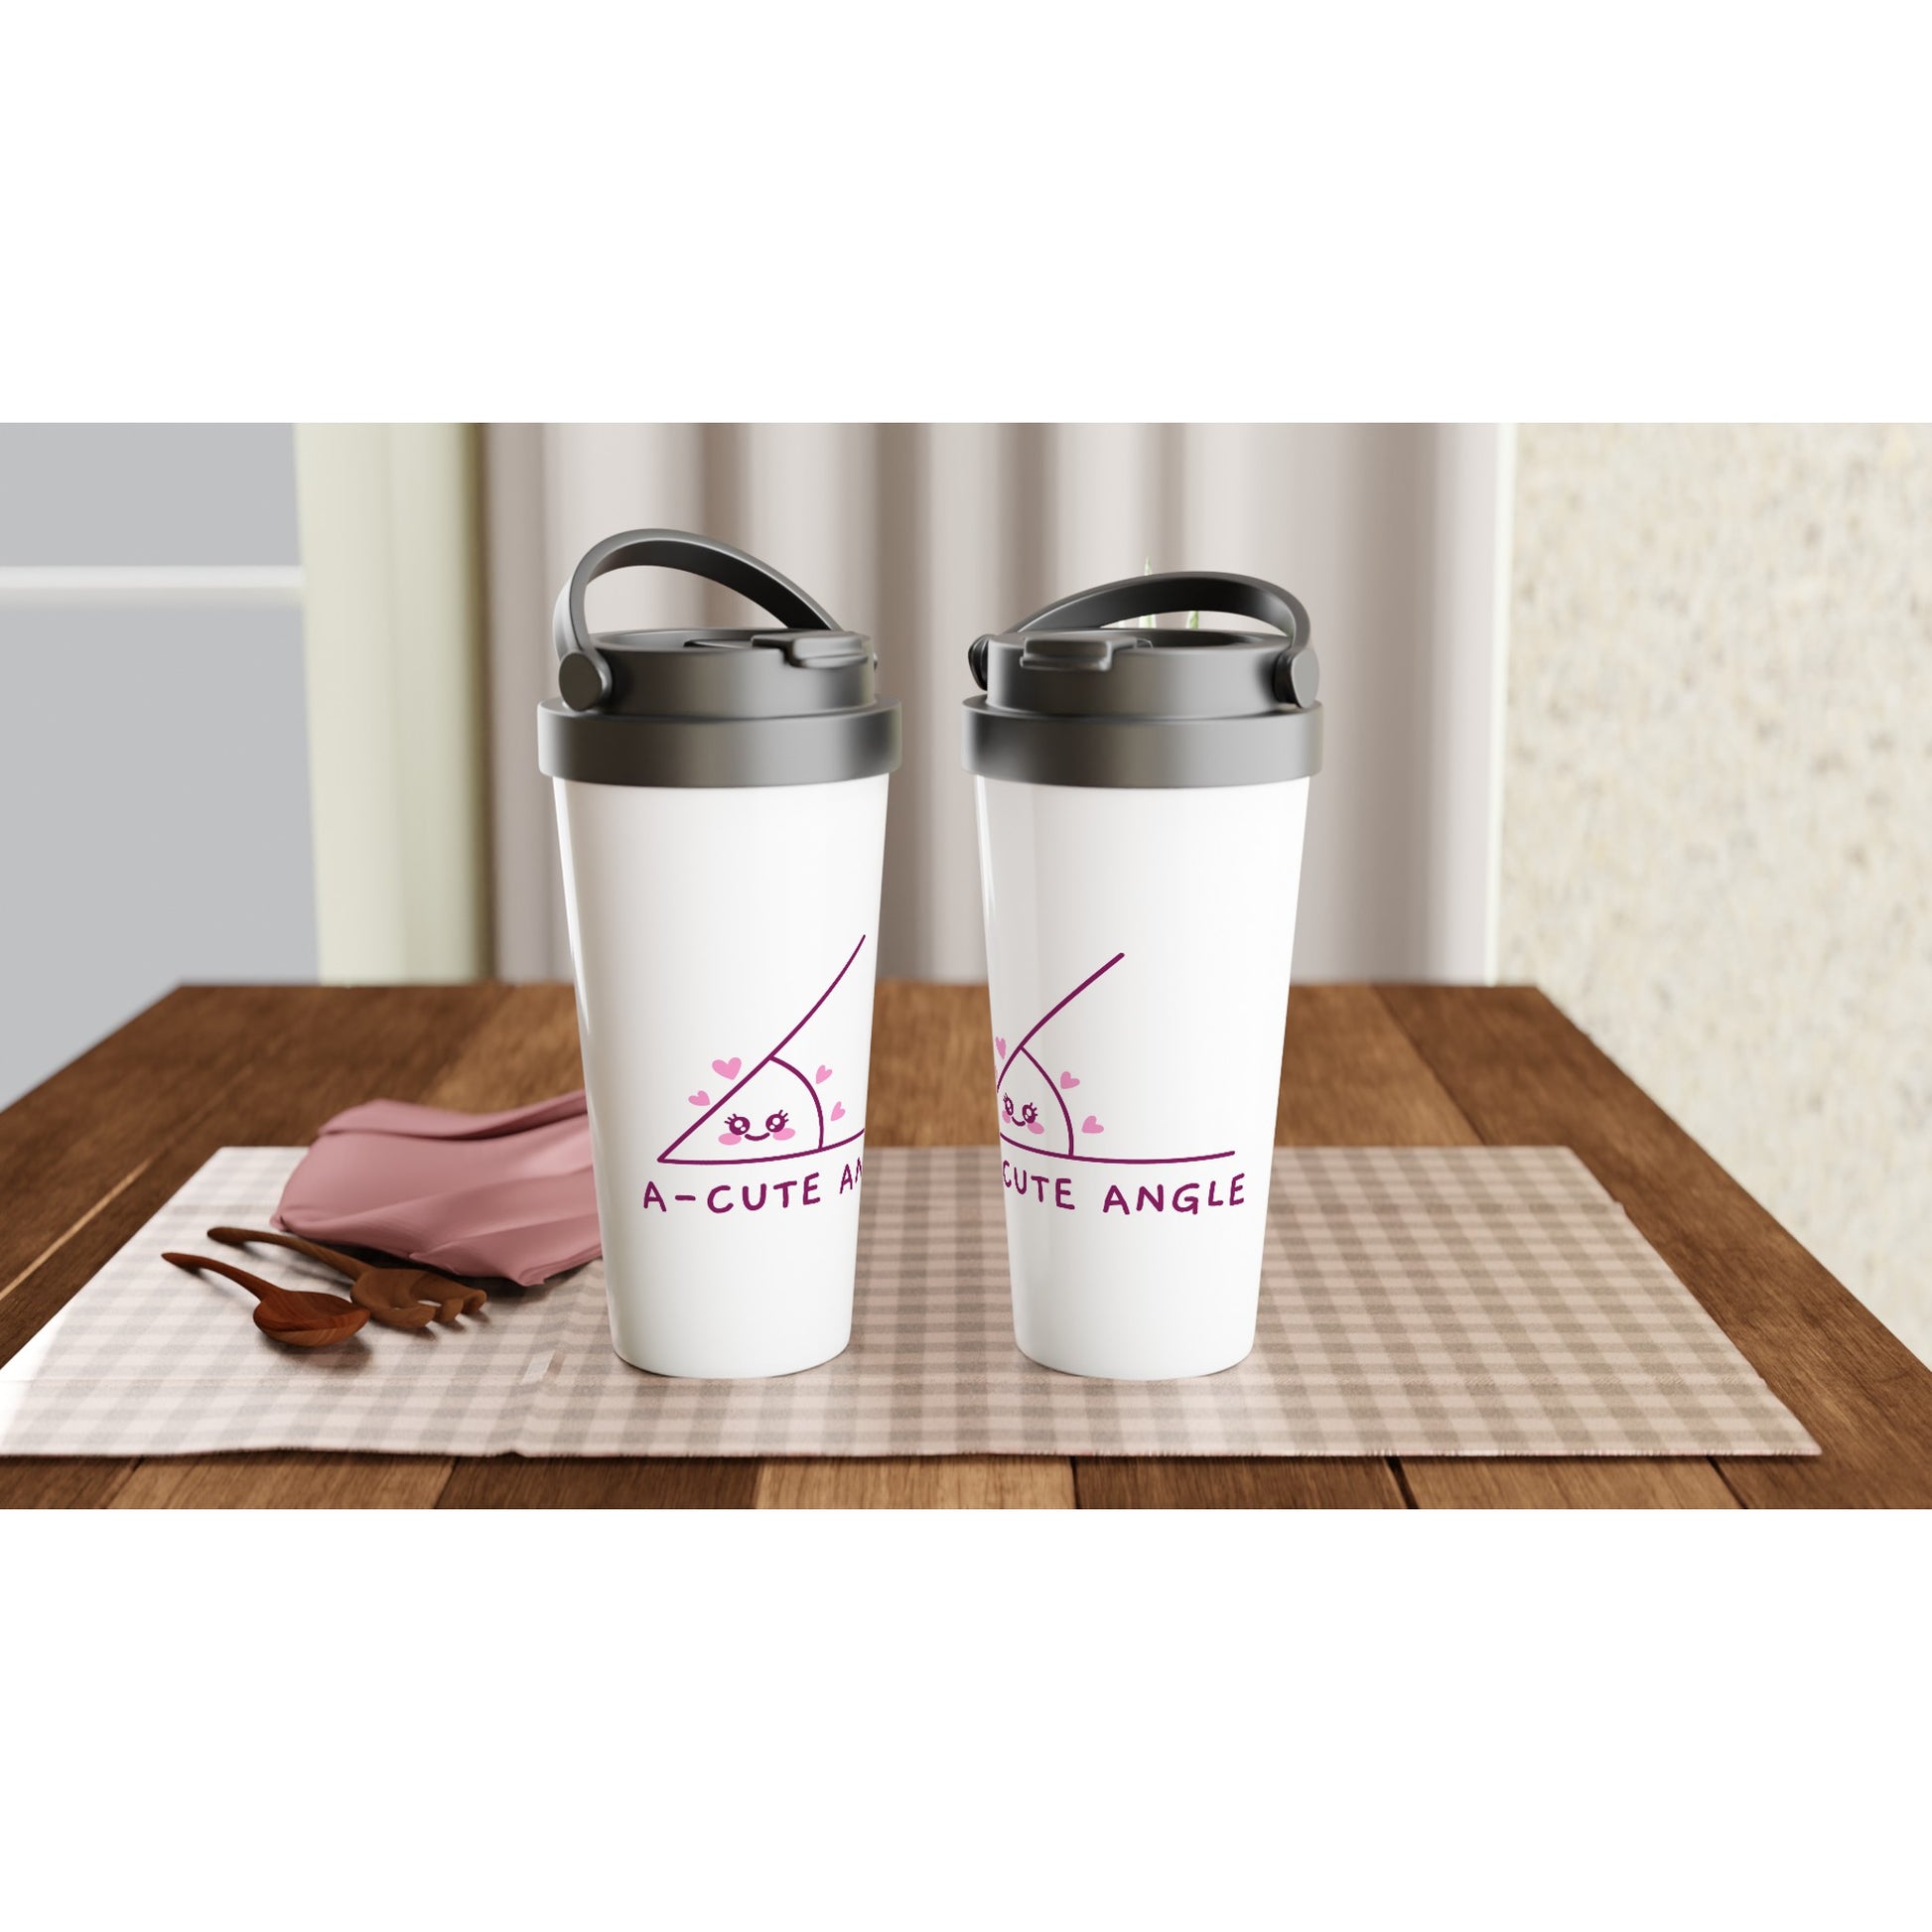 A-Cute Angle - White 15oz Stainless Steel Travel Mug Travel Mug Maths